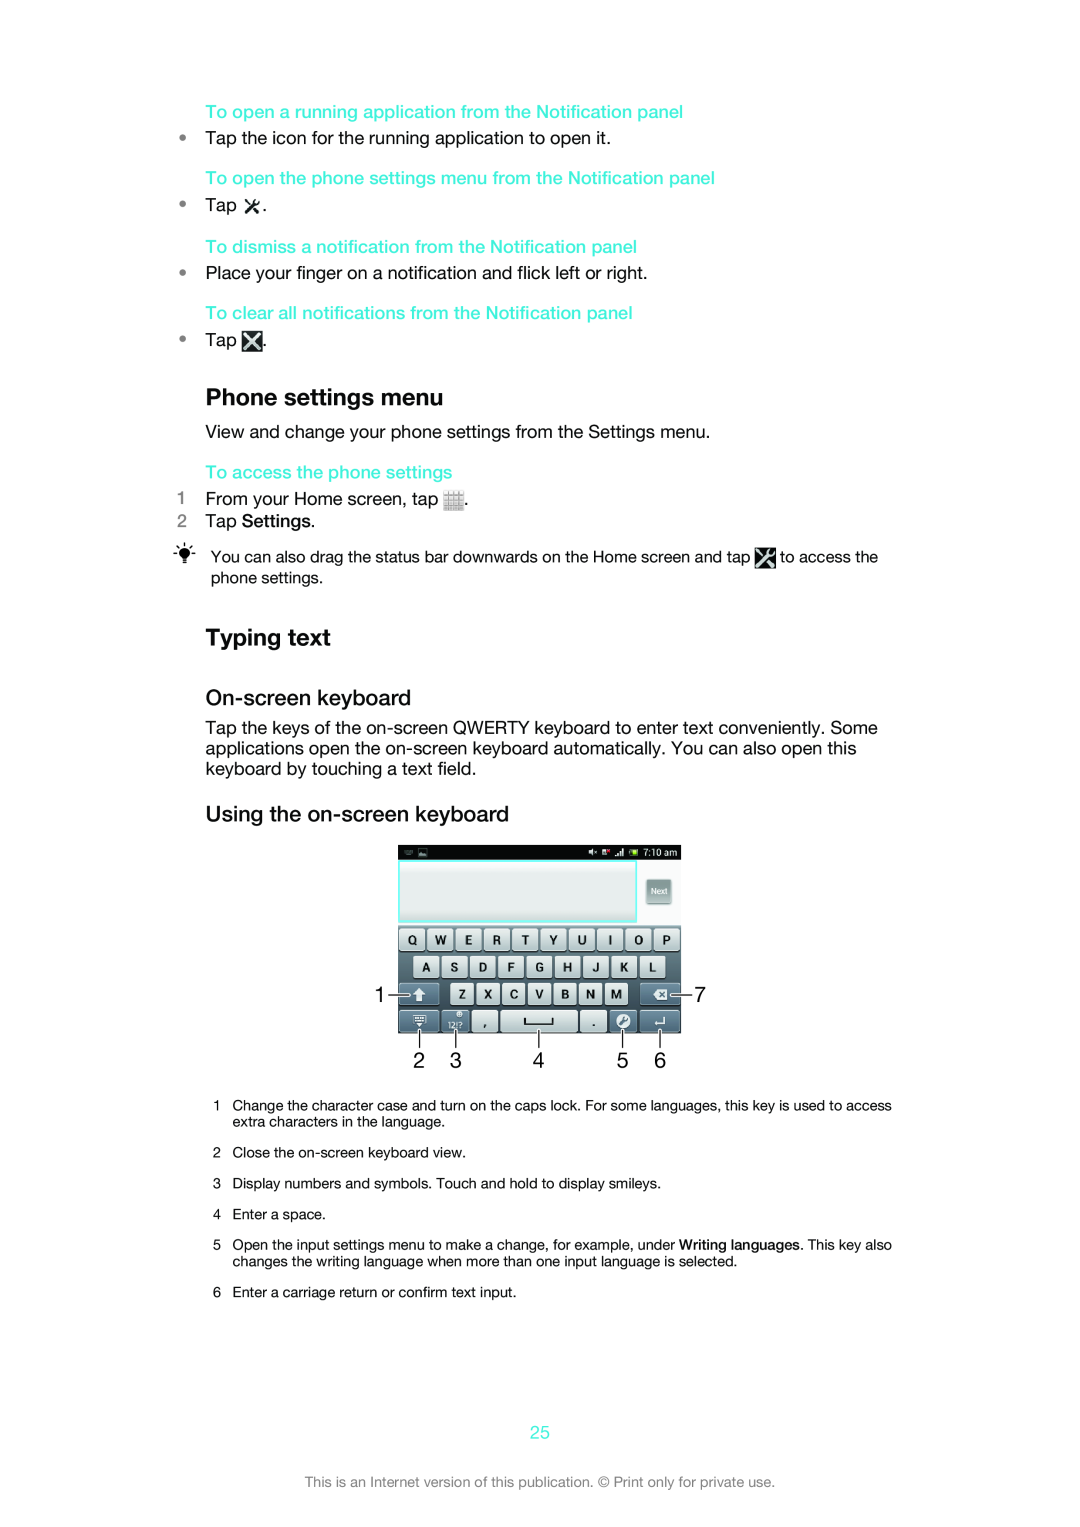 Sony ST26i, 1265-9041, 1265-9045 manual Phone settings menu, Typing text, On-screen keyboard, Using the on-screen keyboard 